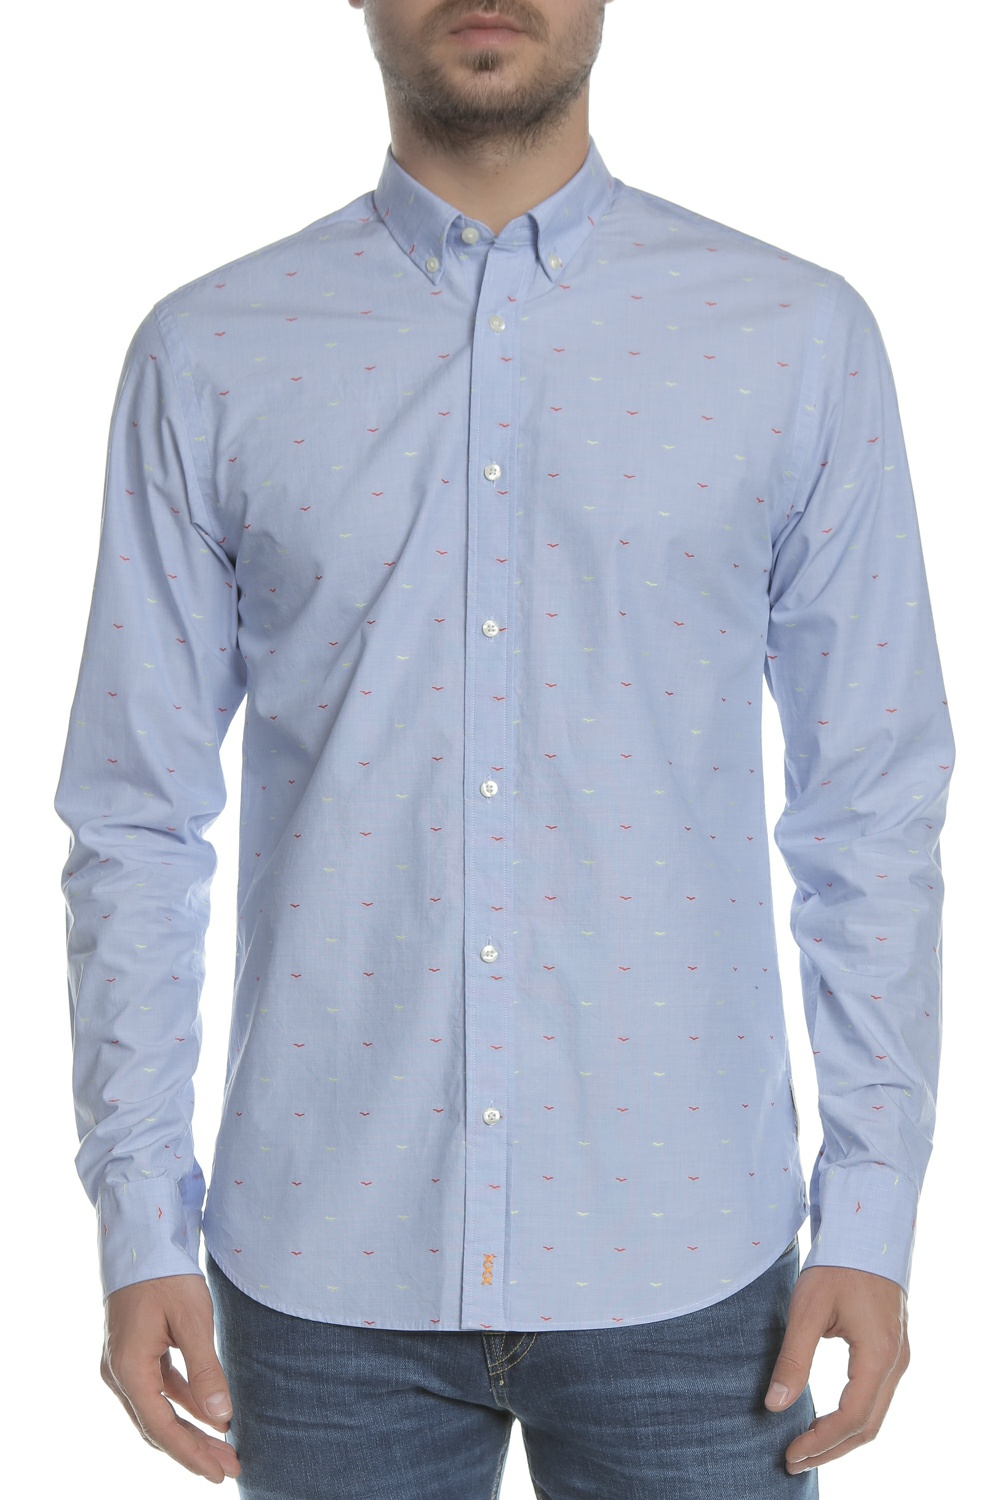 SCOTCH & SODA - Ανδρικό πουκάμισο REGULAR FIT - Fil-Coupι shirt μπλε Ανδρικά/Ρούχα/Πουκάμισα/Μακρυμάνικα